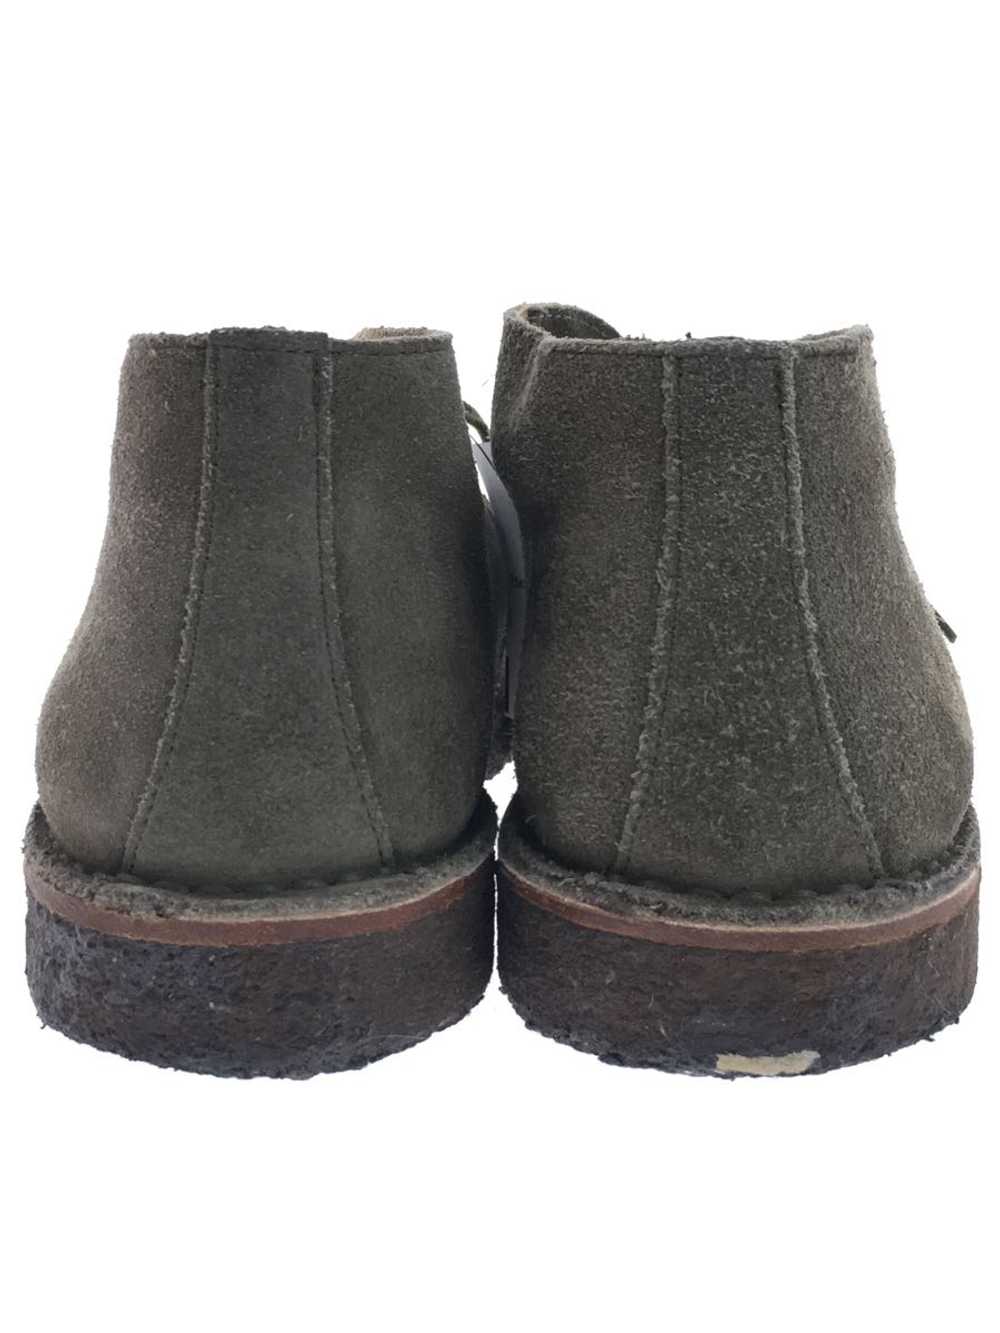 Astorflex Boots/43/Khk/Suede Shoes BYH69 - image 7